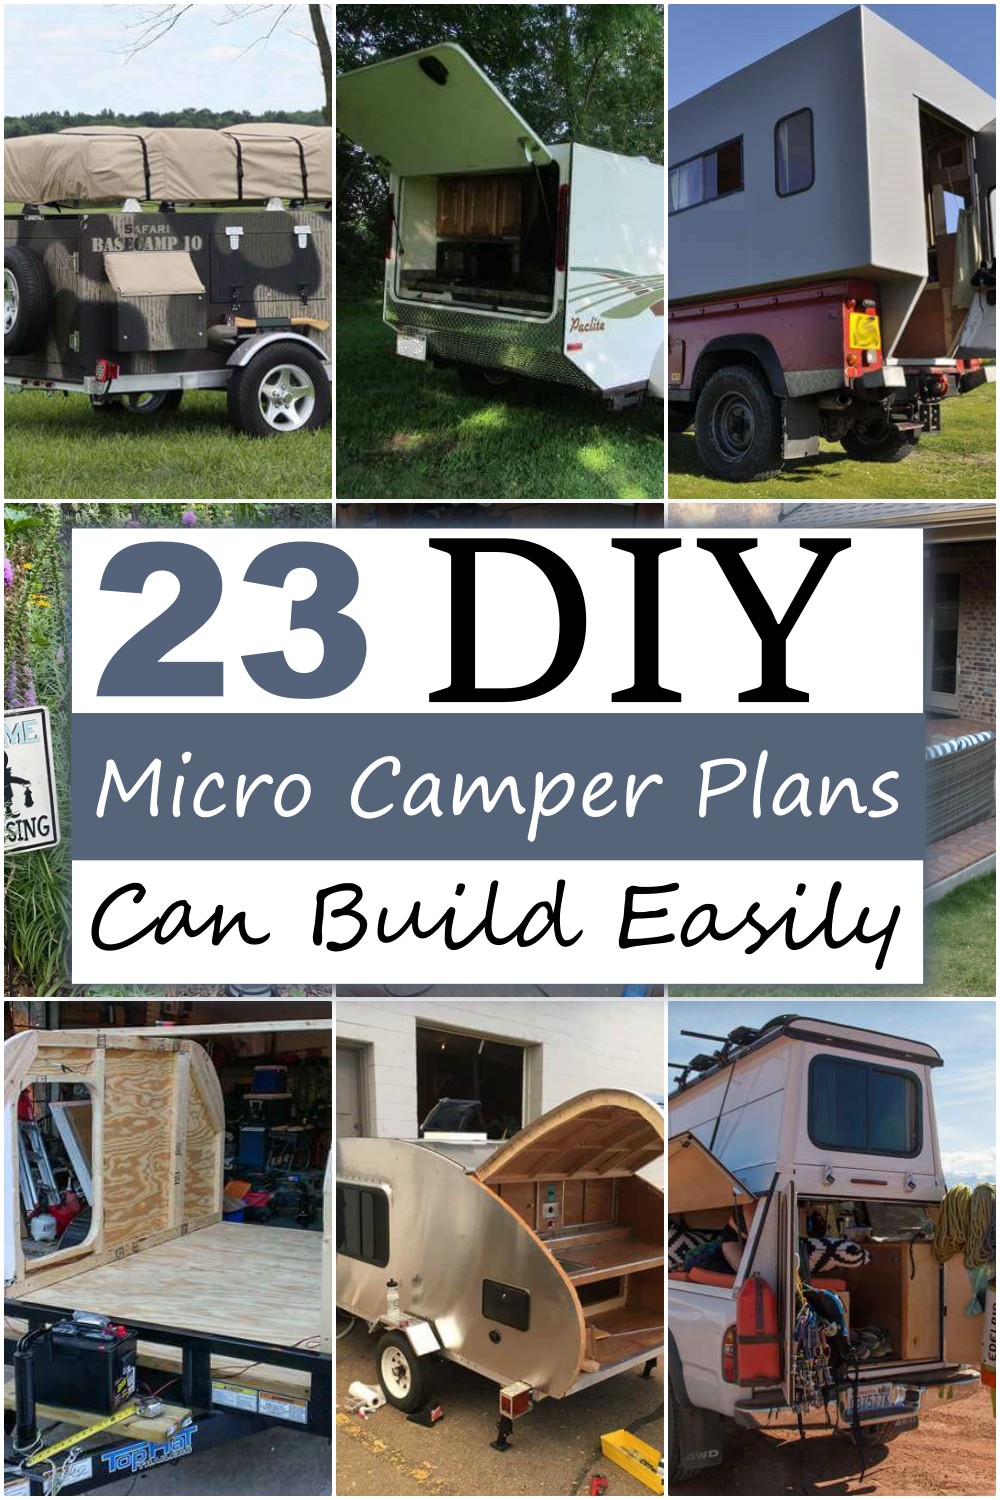 DIY Micro Camper Plans